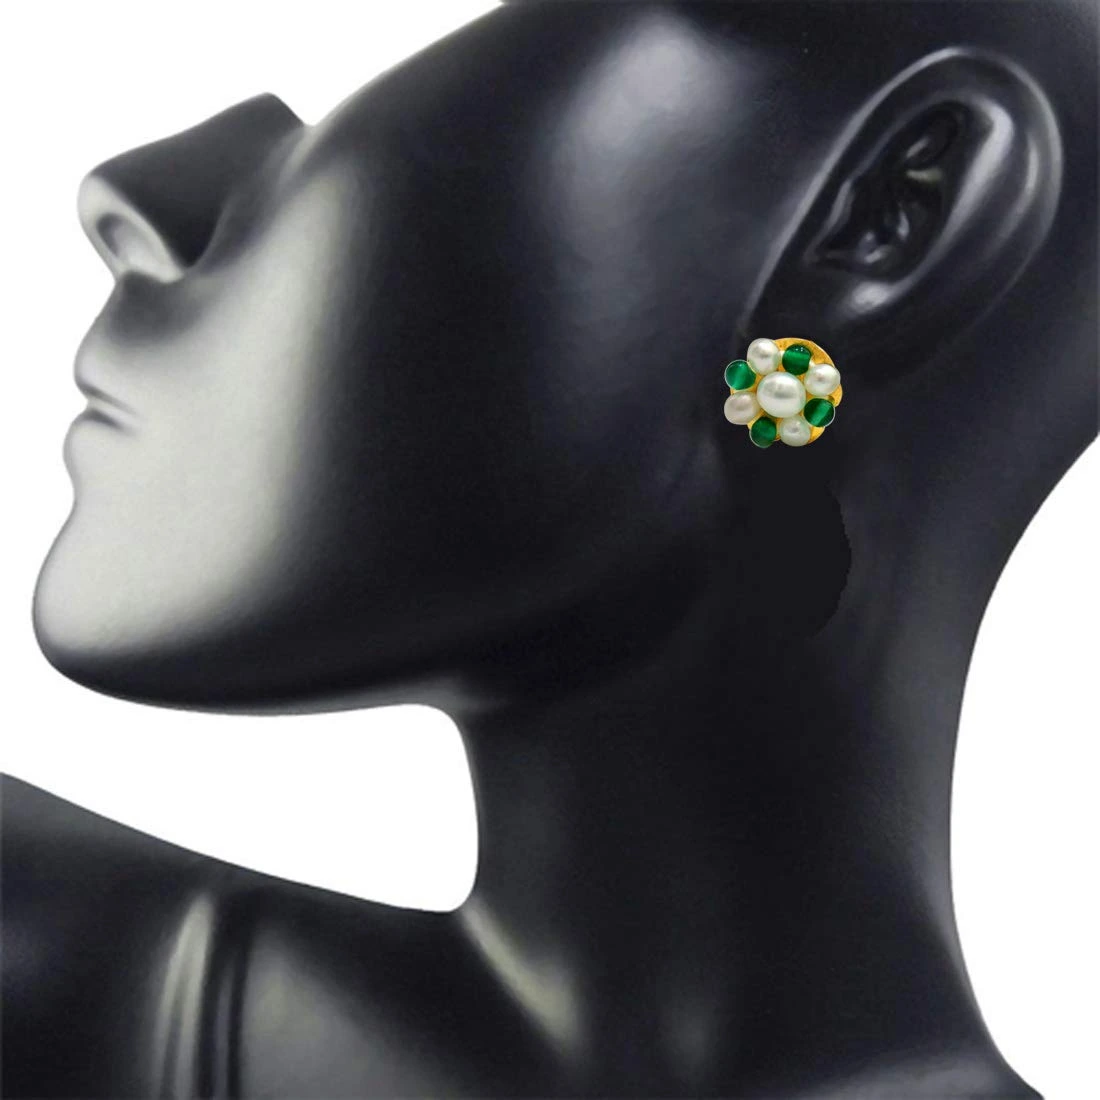 Real Freshwater Pearl & Green Onyx Beads Kuda Jodi Earrings for Women (SE110)